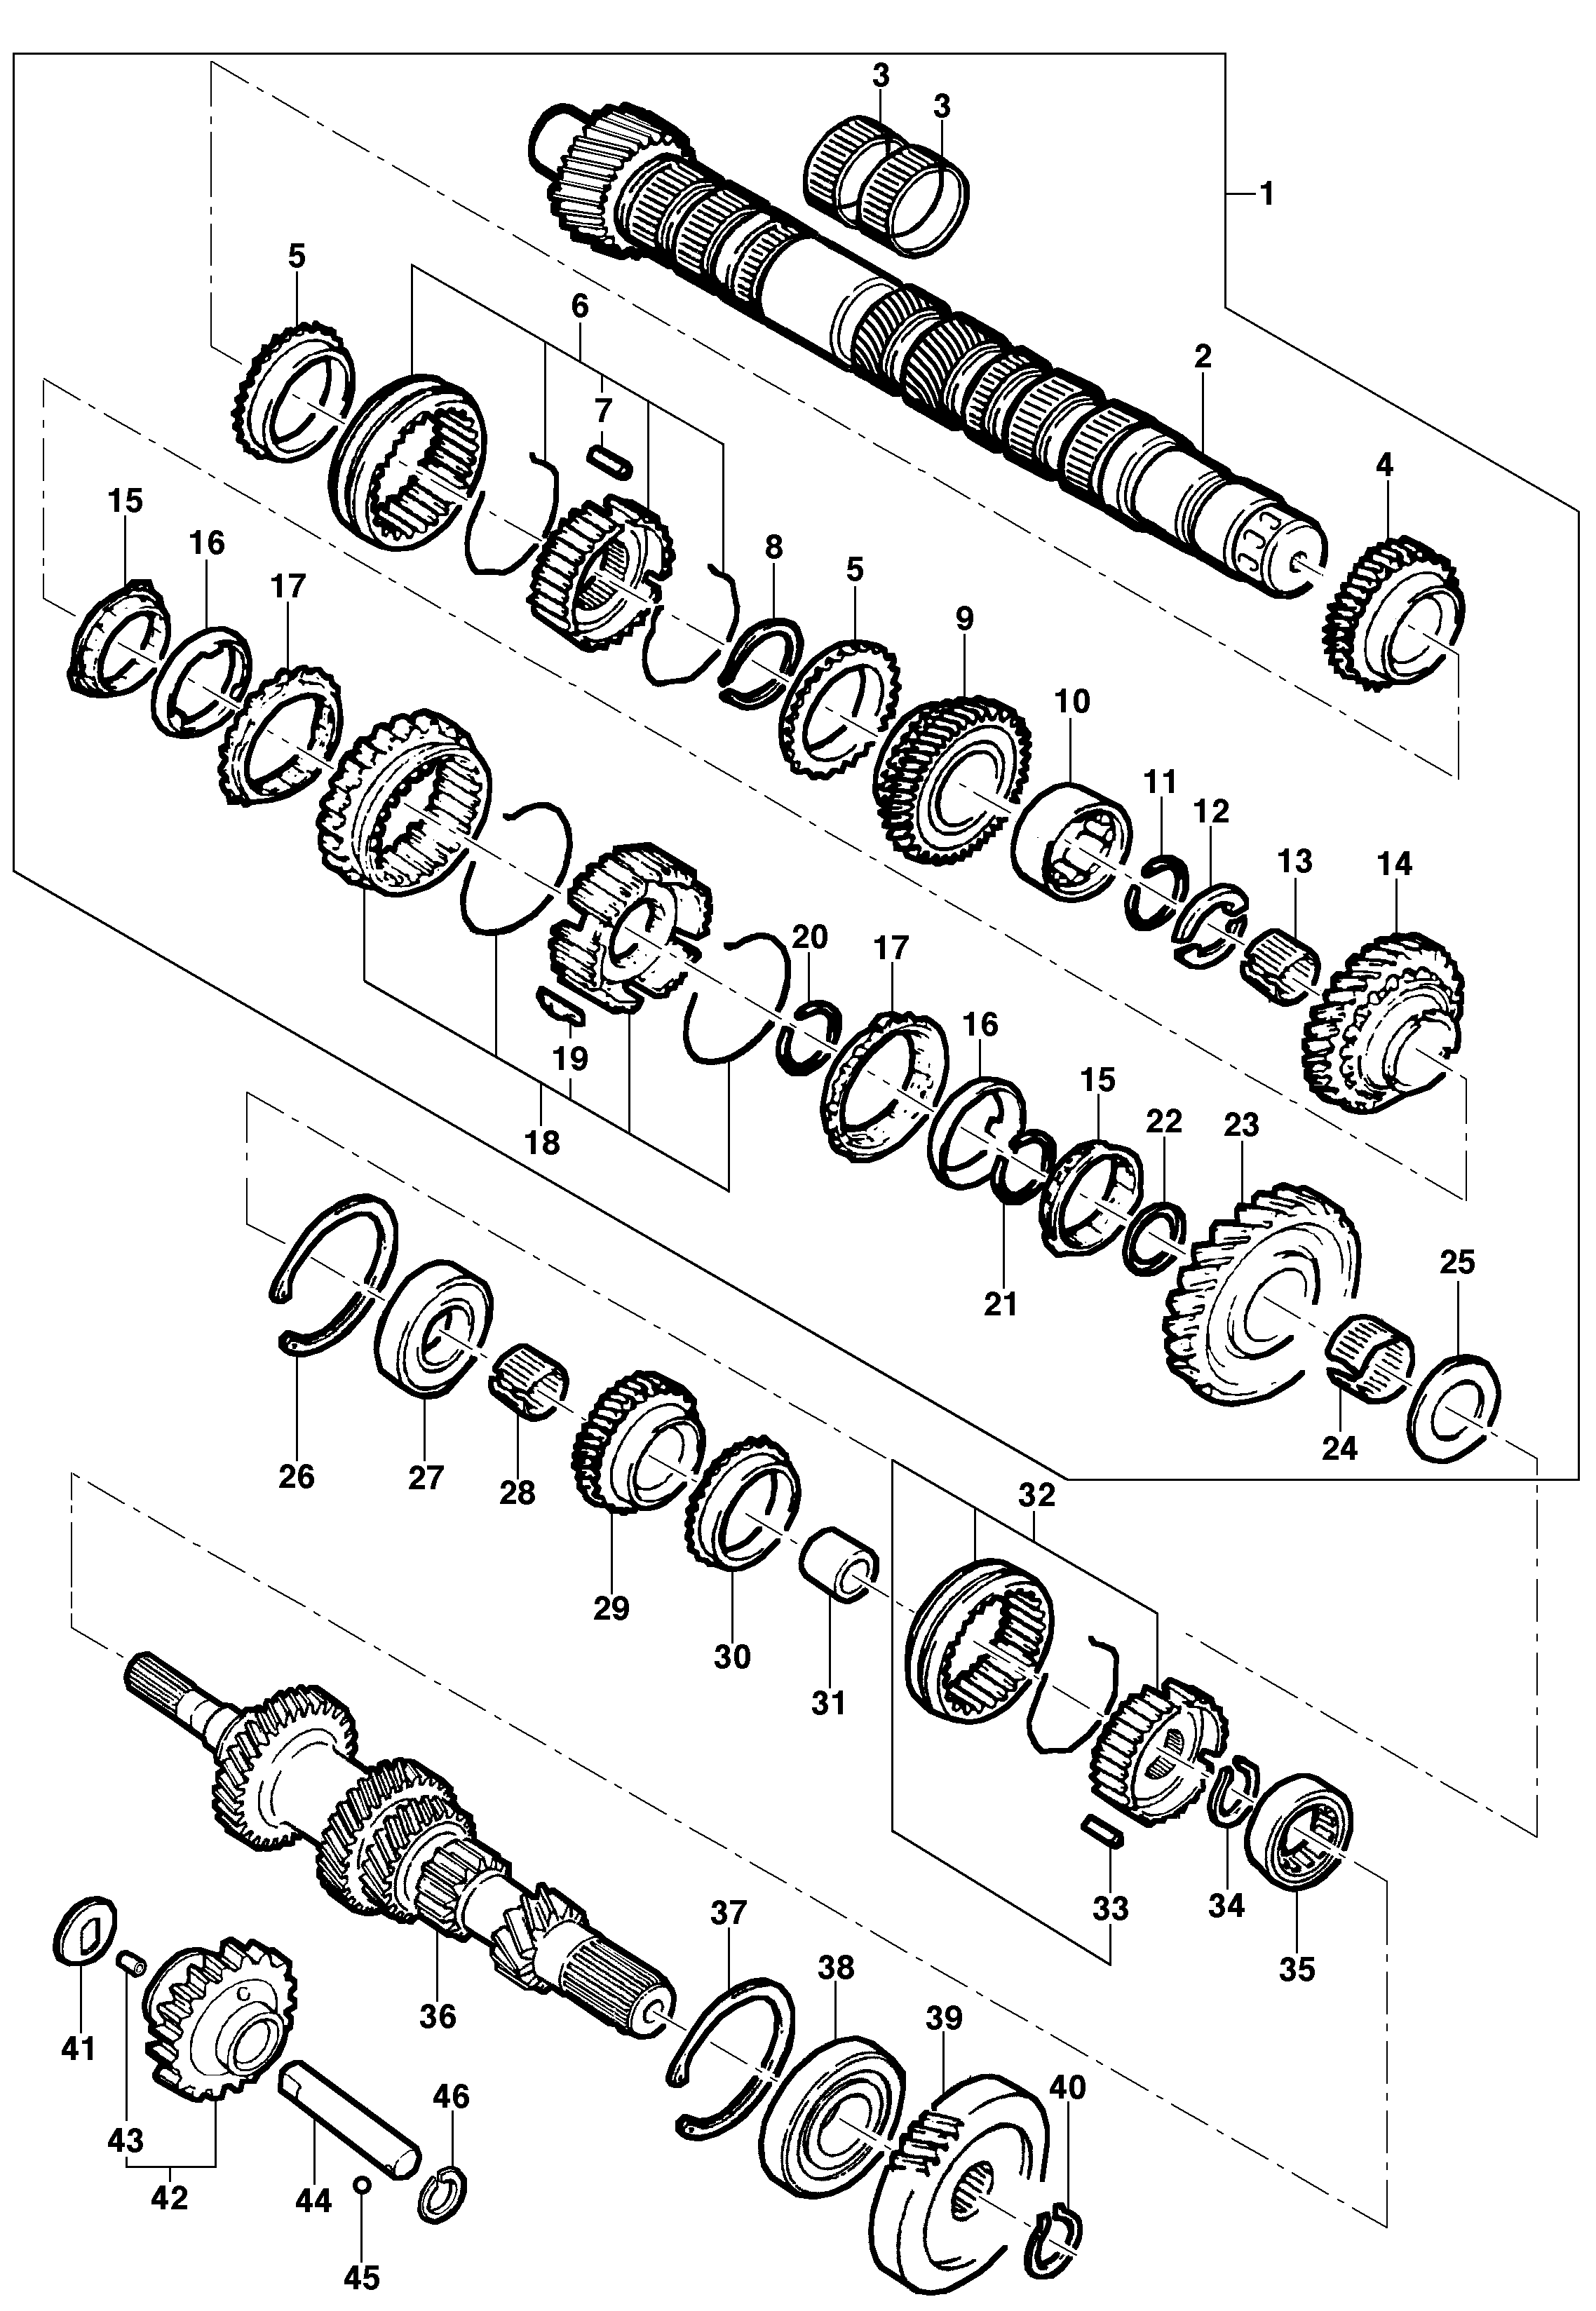 Mechanical transmission M39 - gears